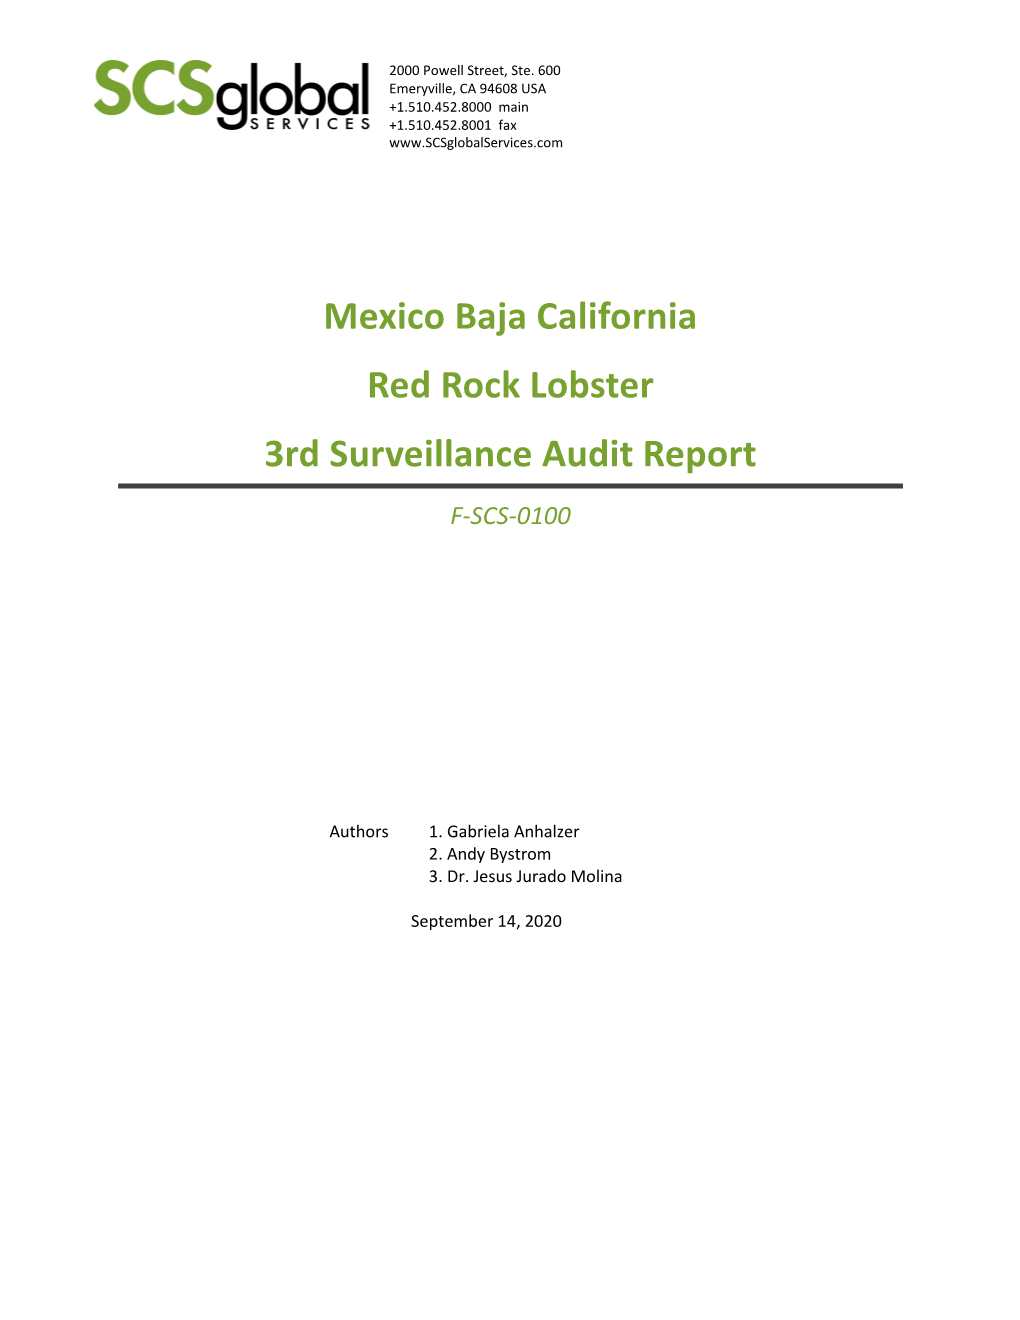 Mexico Baja California Red Rock Lobster 3Rd Surveillance Audit Report F-SCS-0100